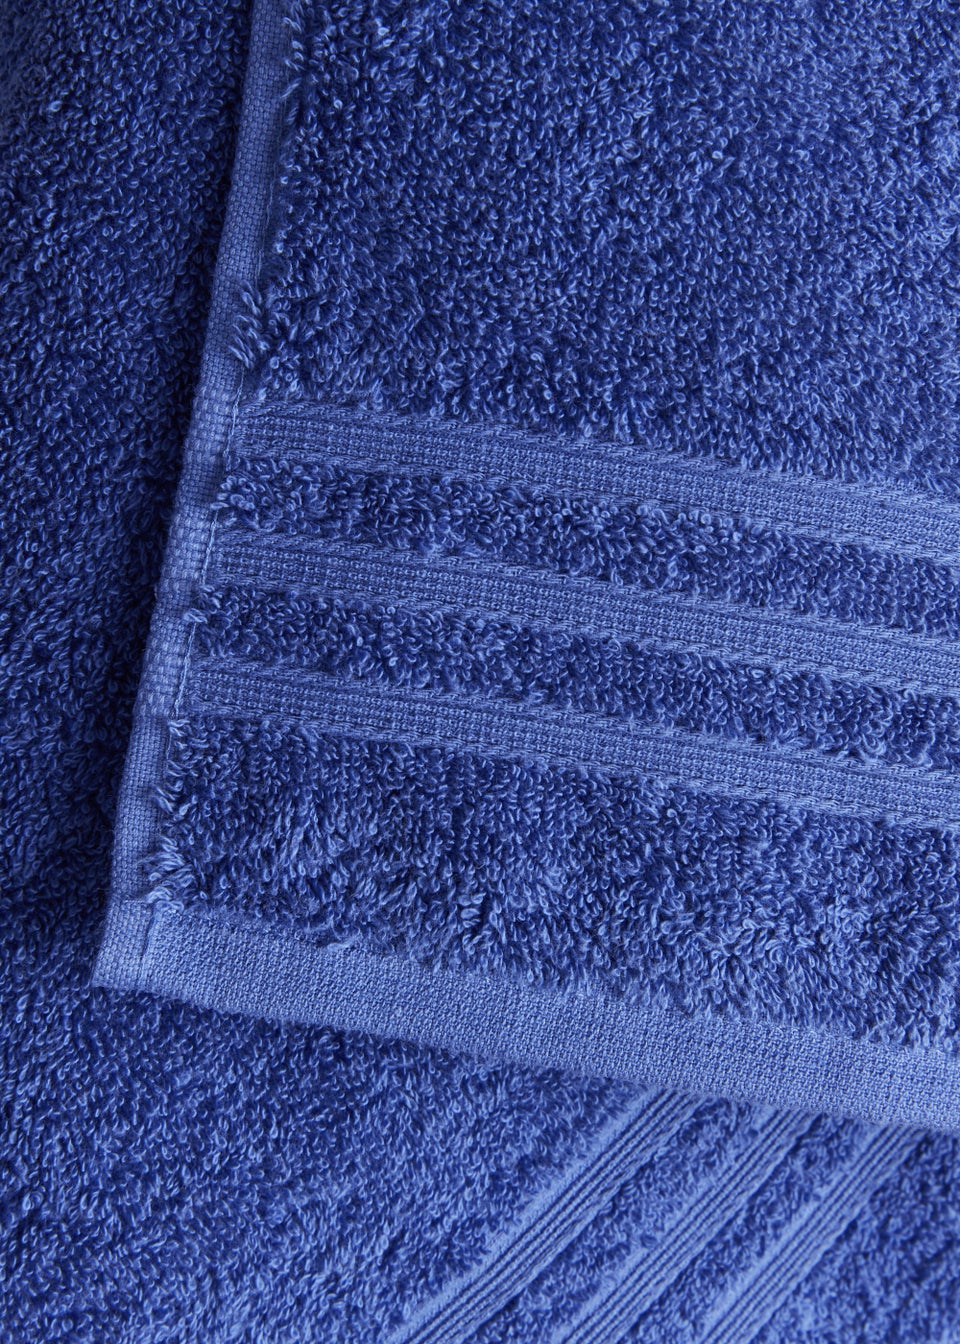 Royal Blue 100% Egyptian Cotton Towels